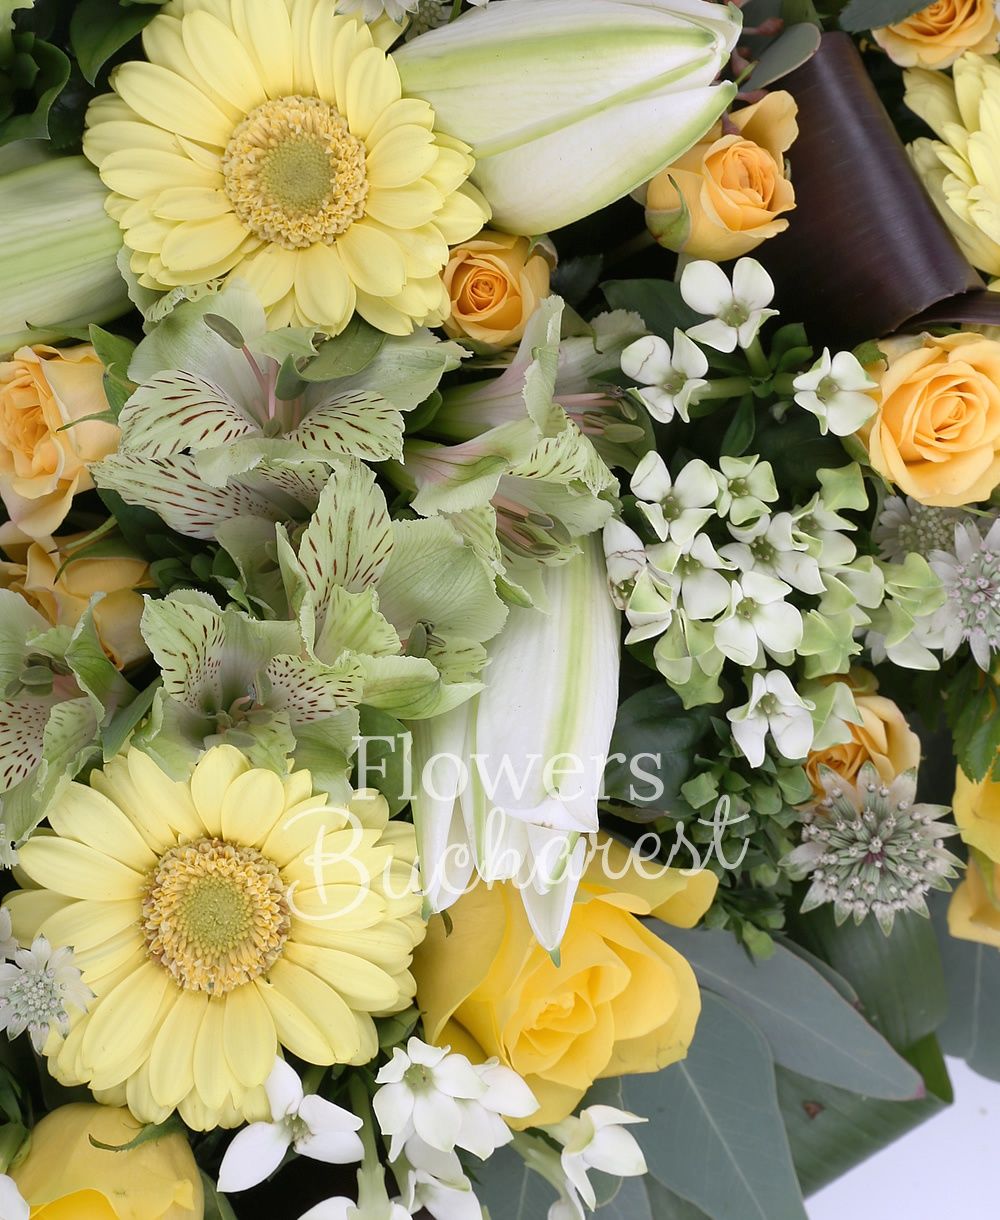 10 white bouvardia, 5 lilies, 10 yellow roses, 10 yellow miniroses, 5 white astranția, 10 yellow gerbera, 5 yellow alstroemeria, greenery